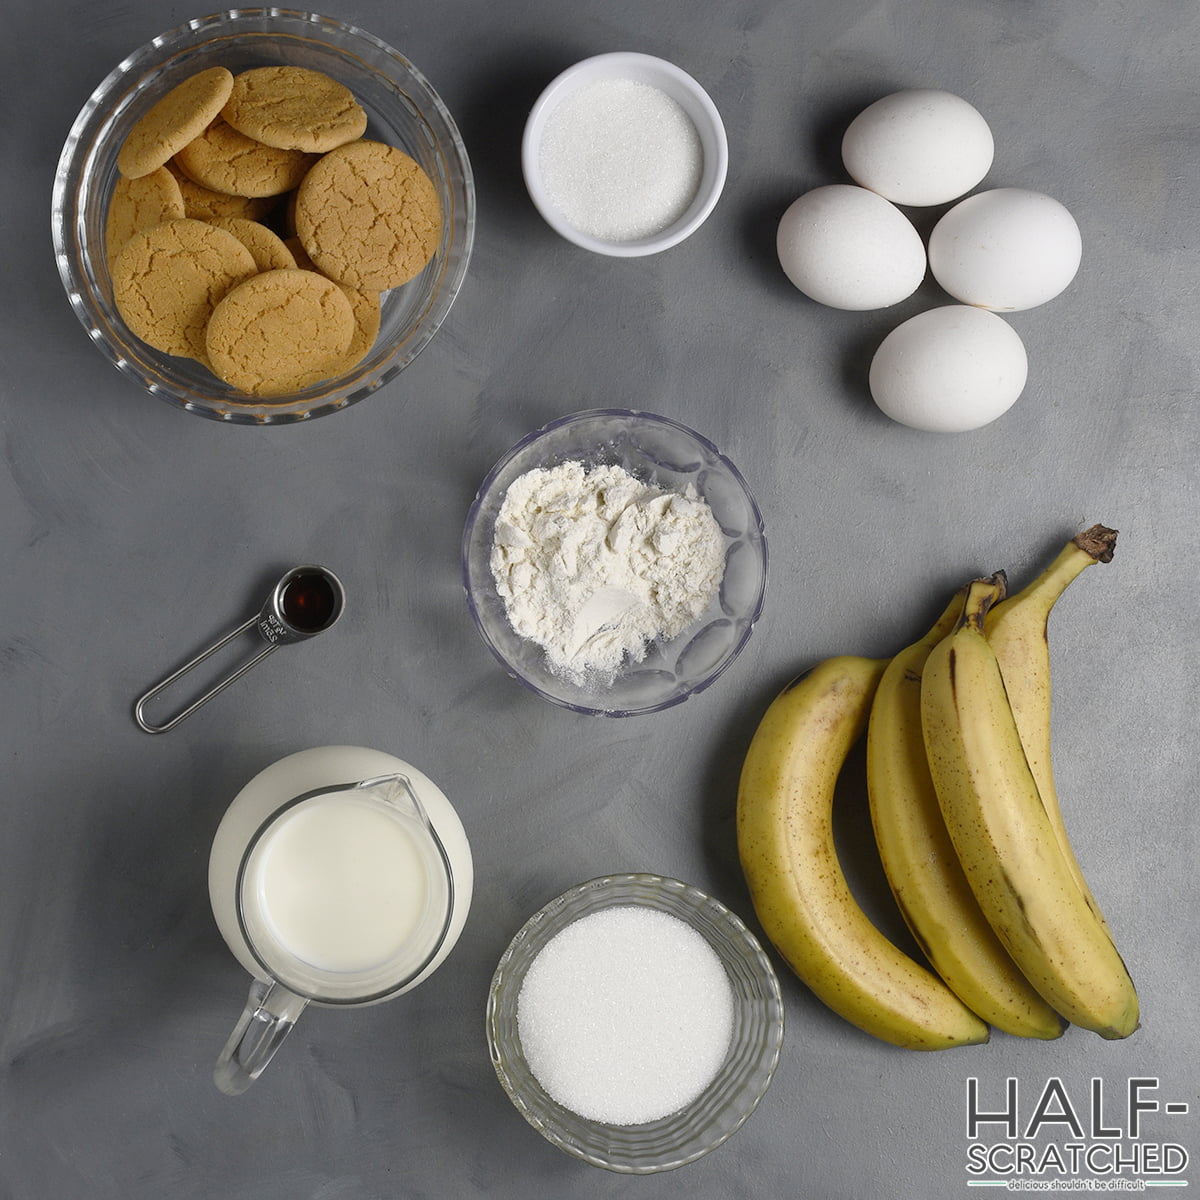 Pioneer Woman's Banana Pudding Ingredients